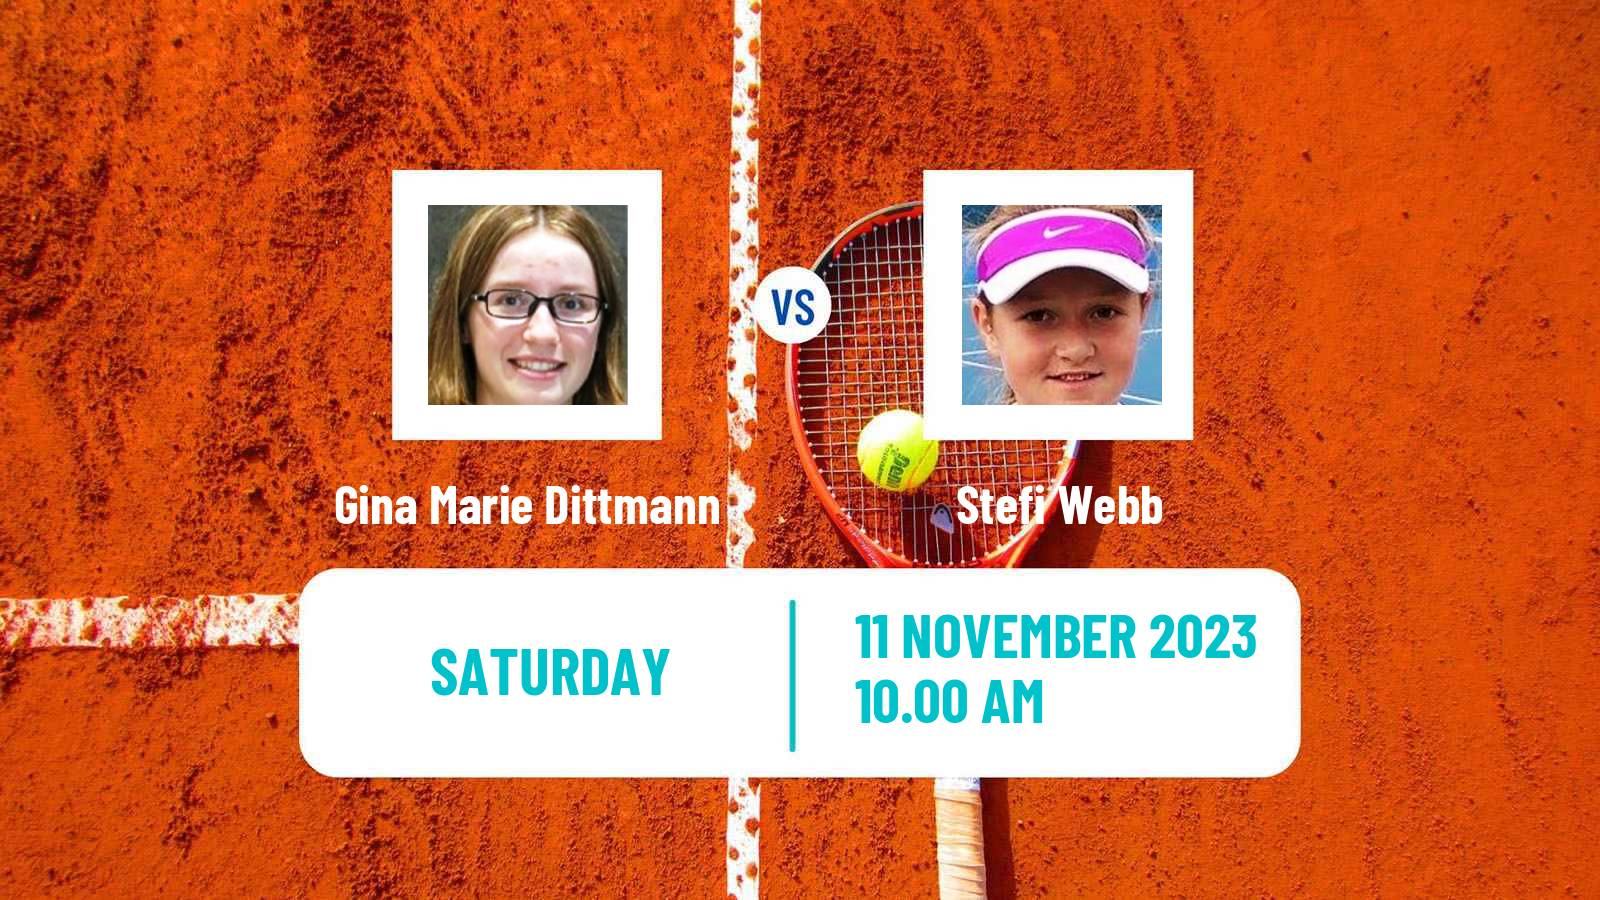 Tennis ITF W15 Champaign Il Women Gina Marie Dittmann - Stefi Webb